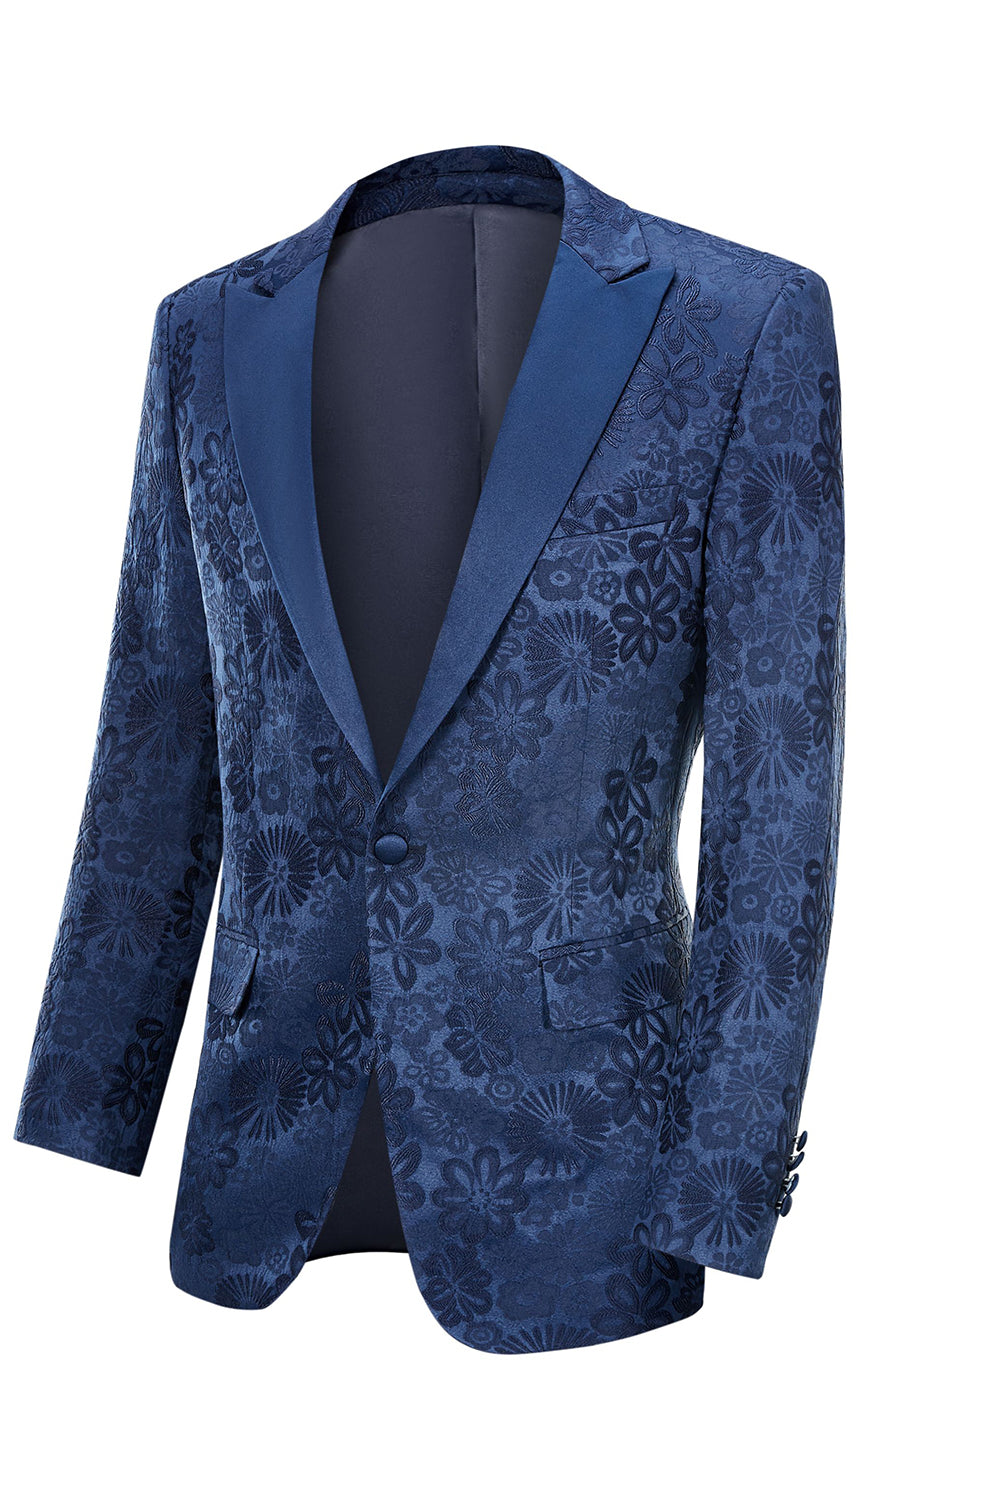 Peak Lapel Dark Blue Jacquard Men's Prom Wedding Party Suits